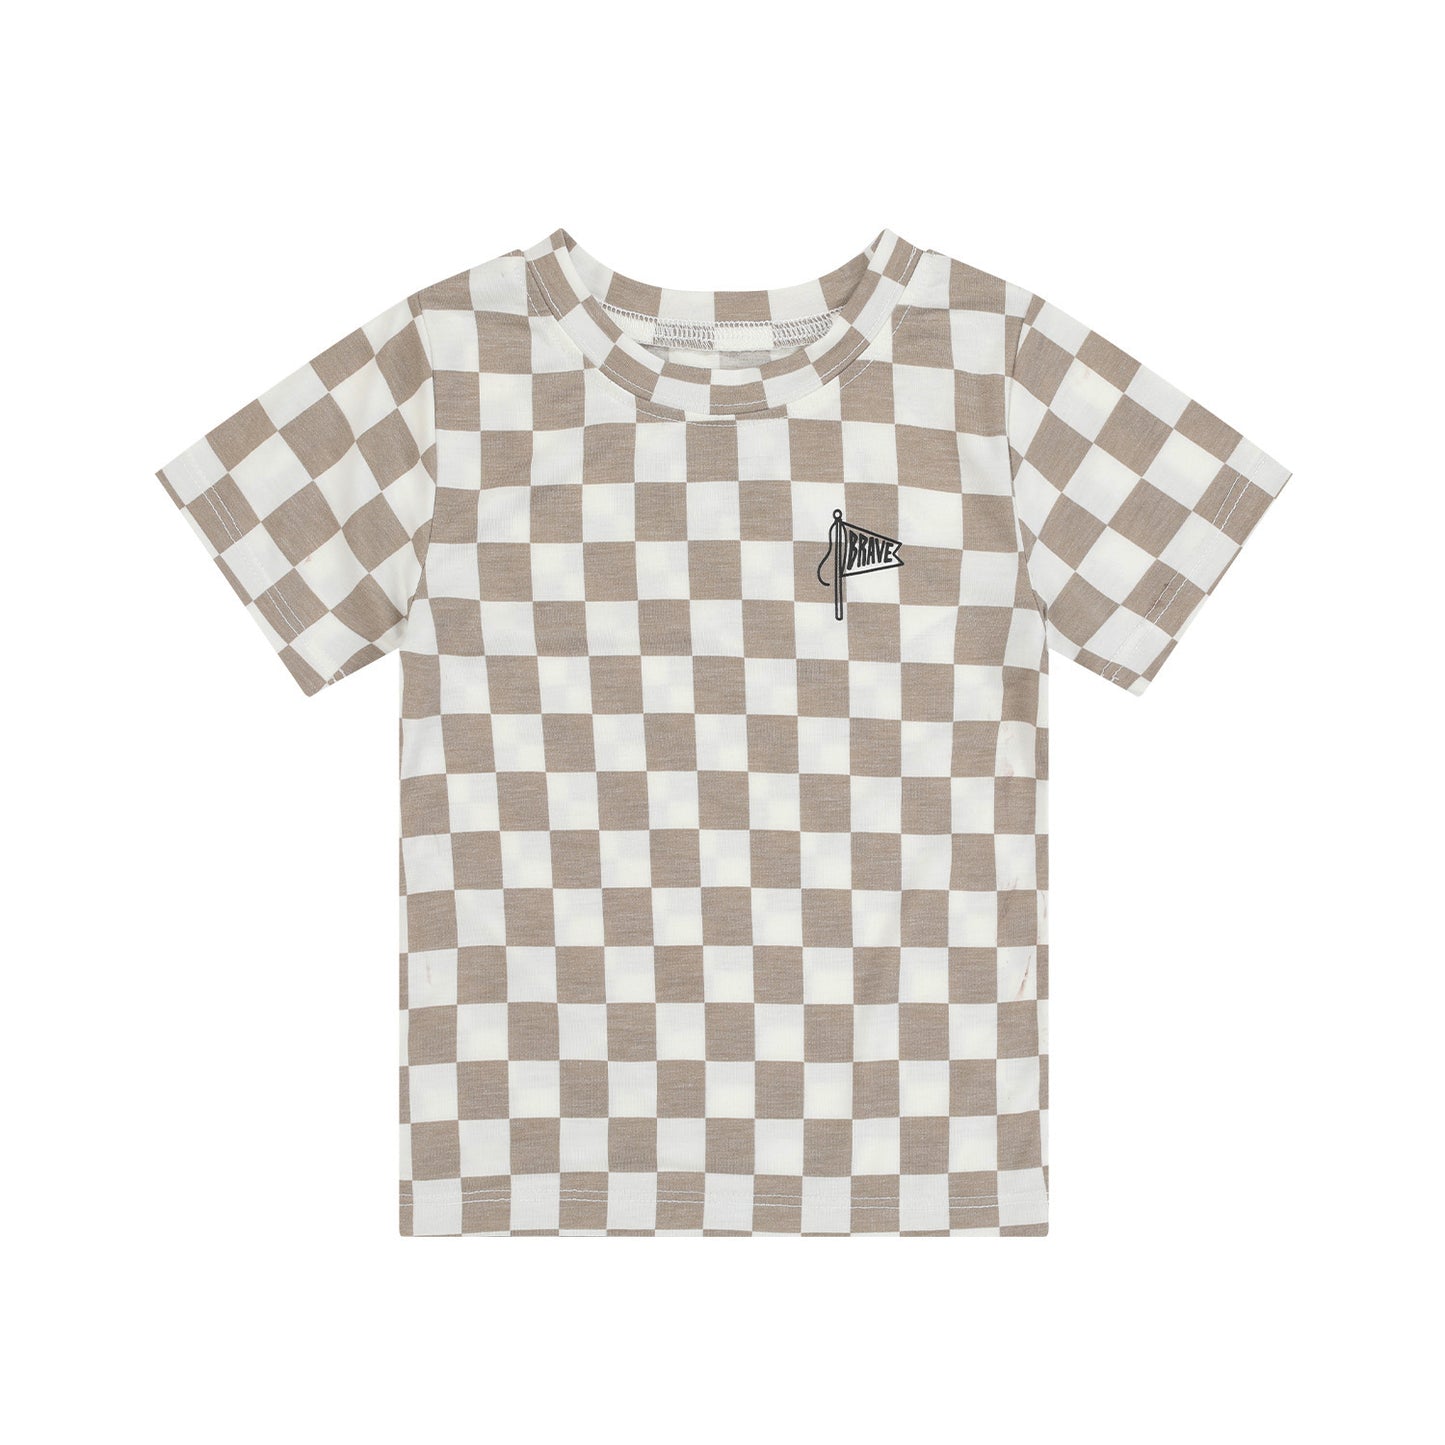 Checkered Shirt With Brave Flag Shirt